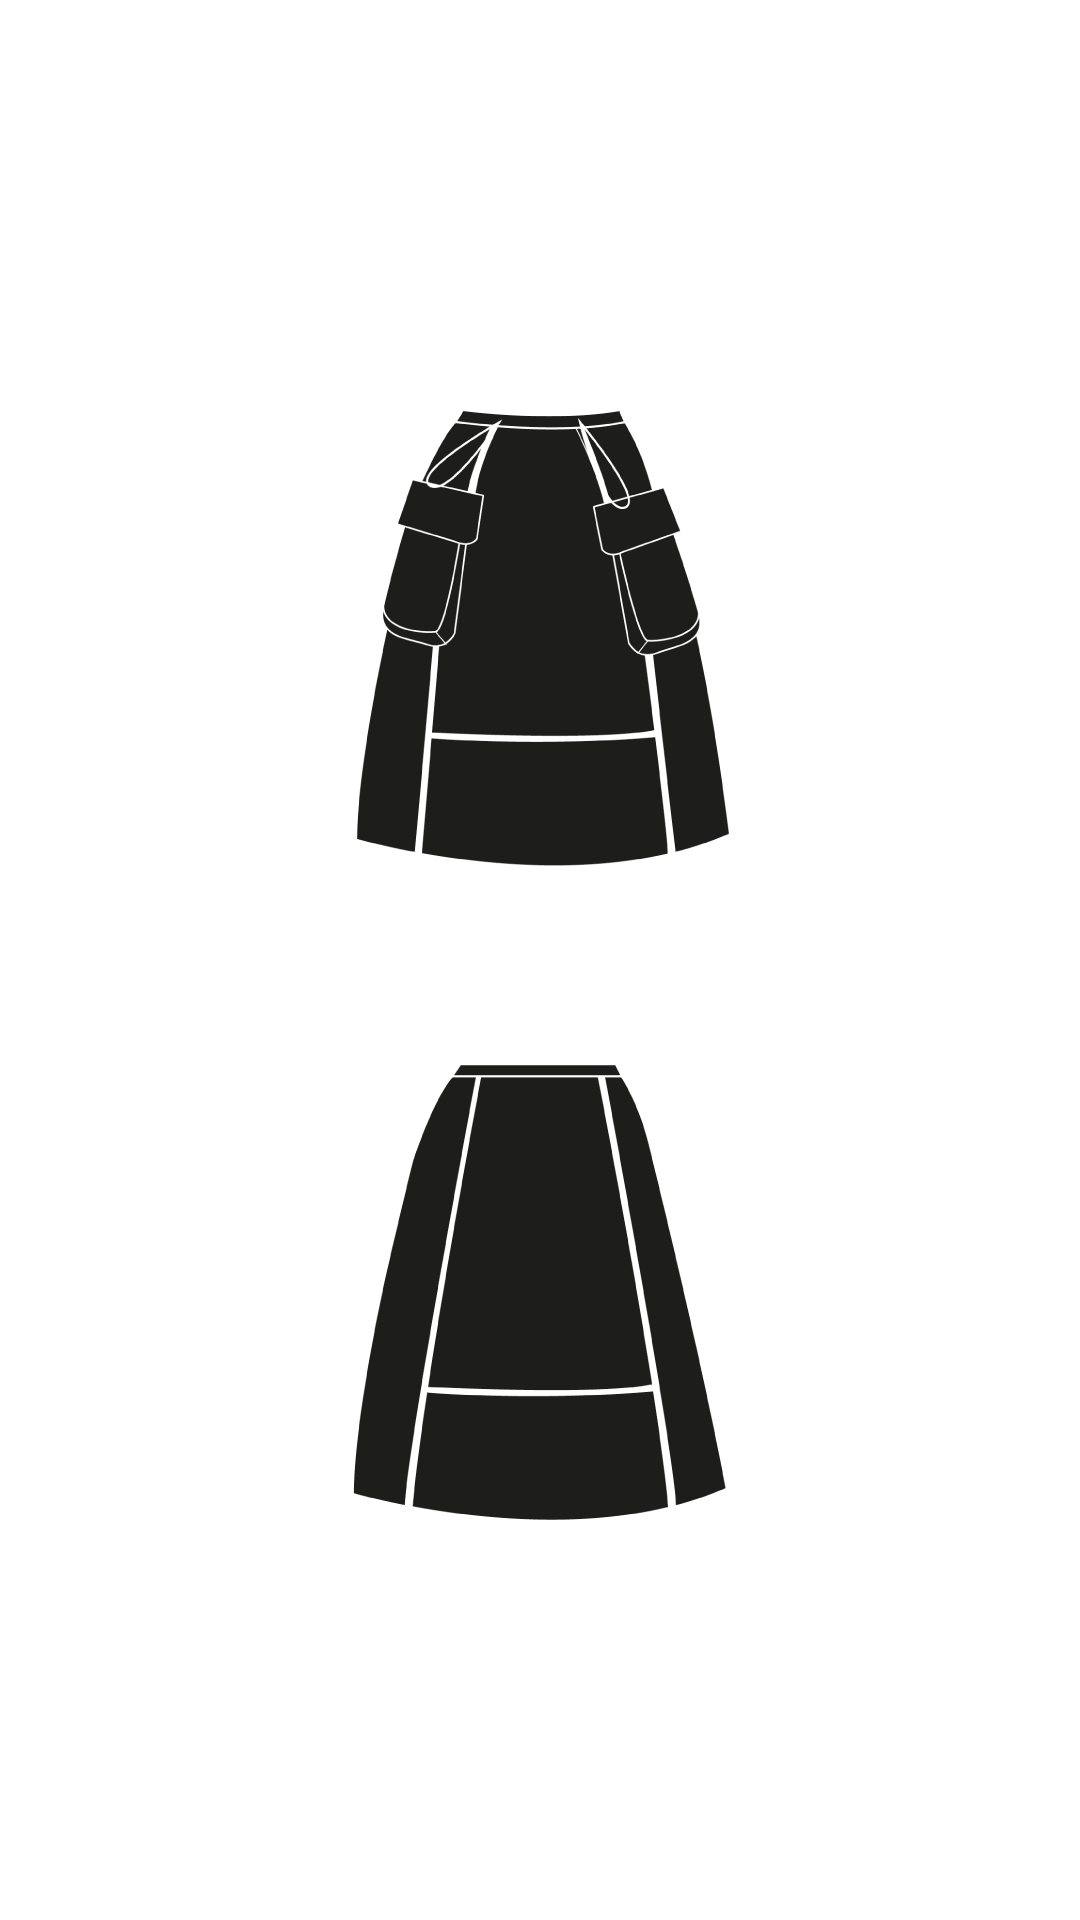 Clinton Skirt (Sample Product)